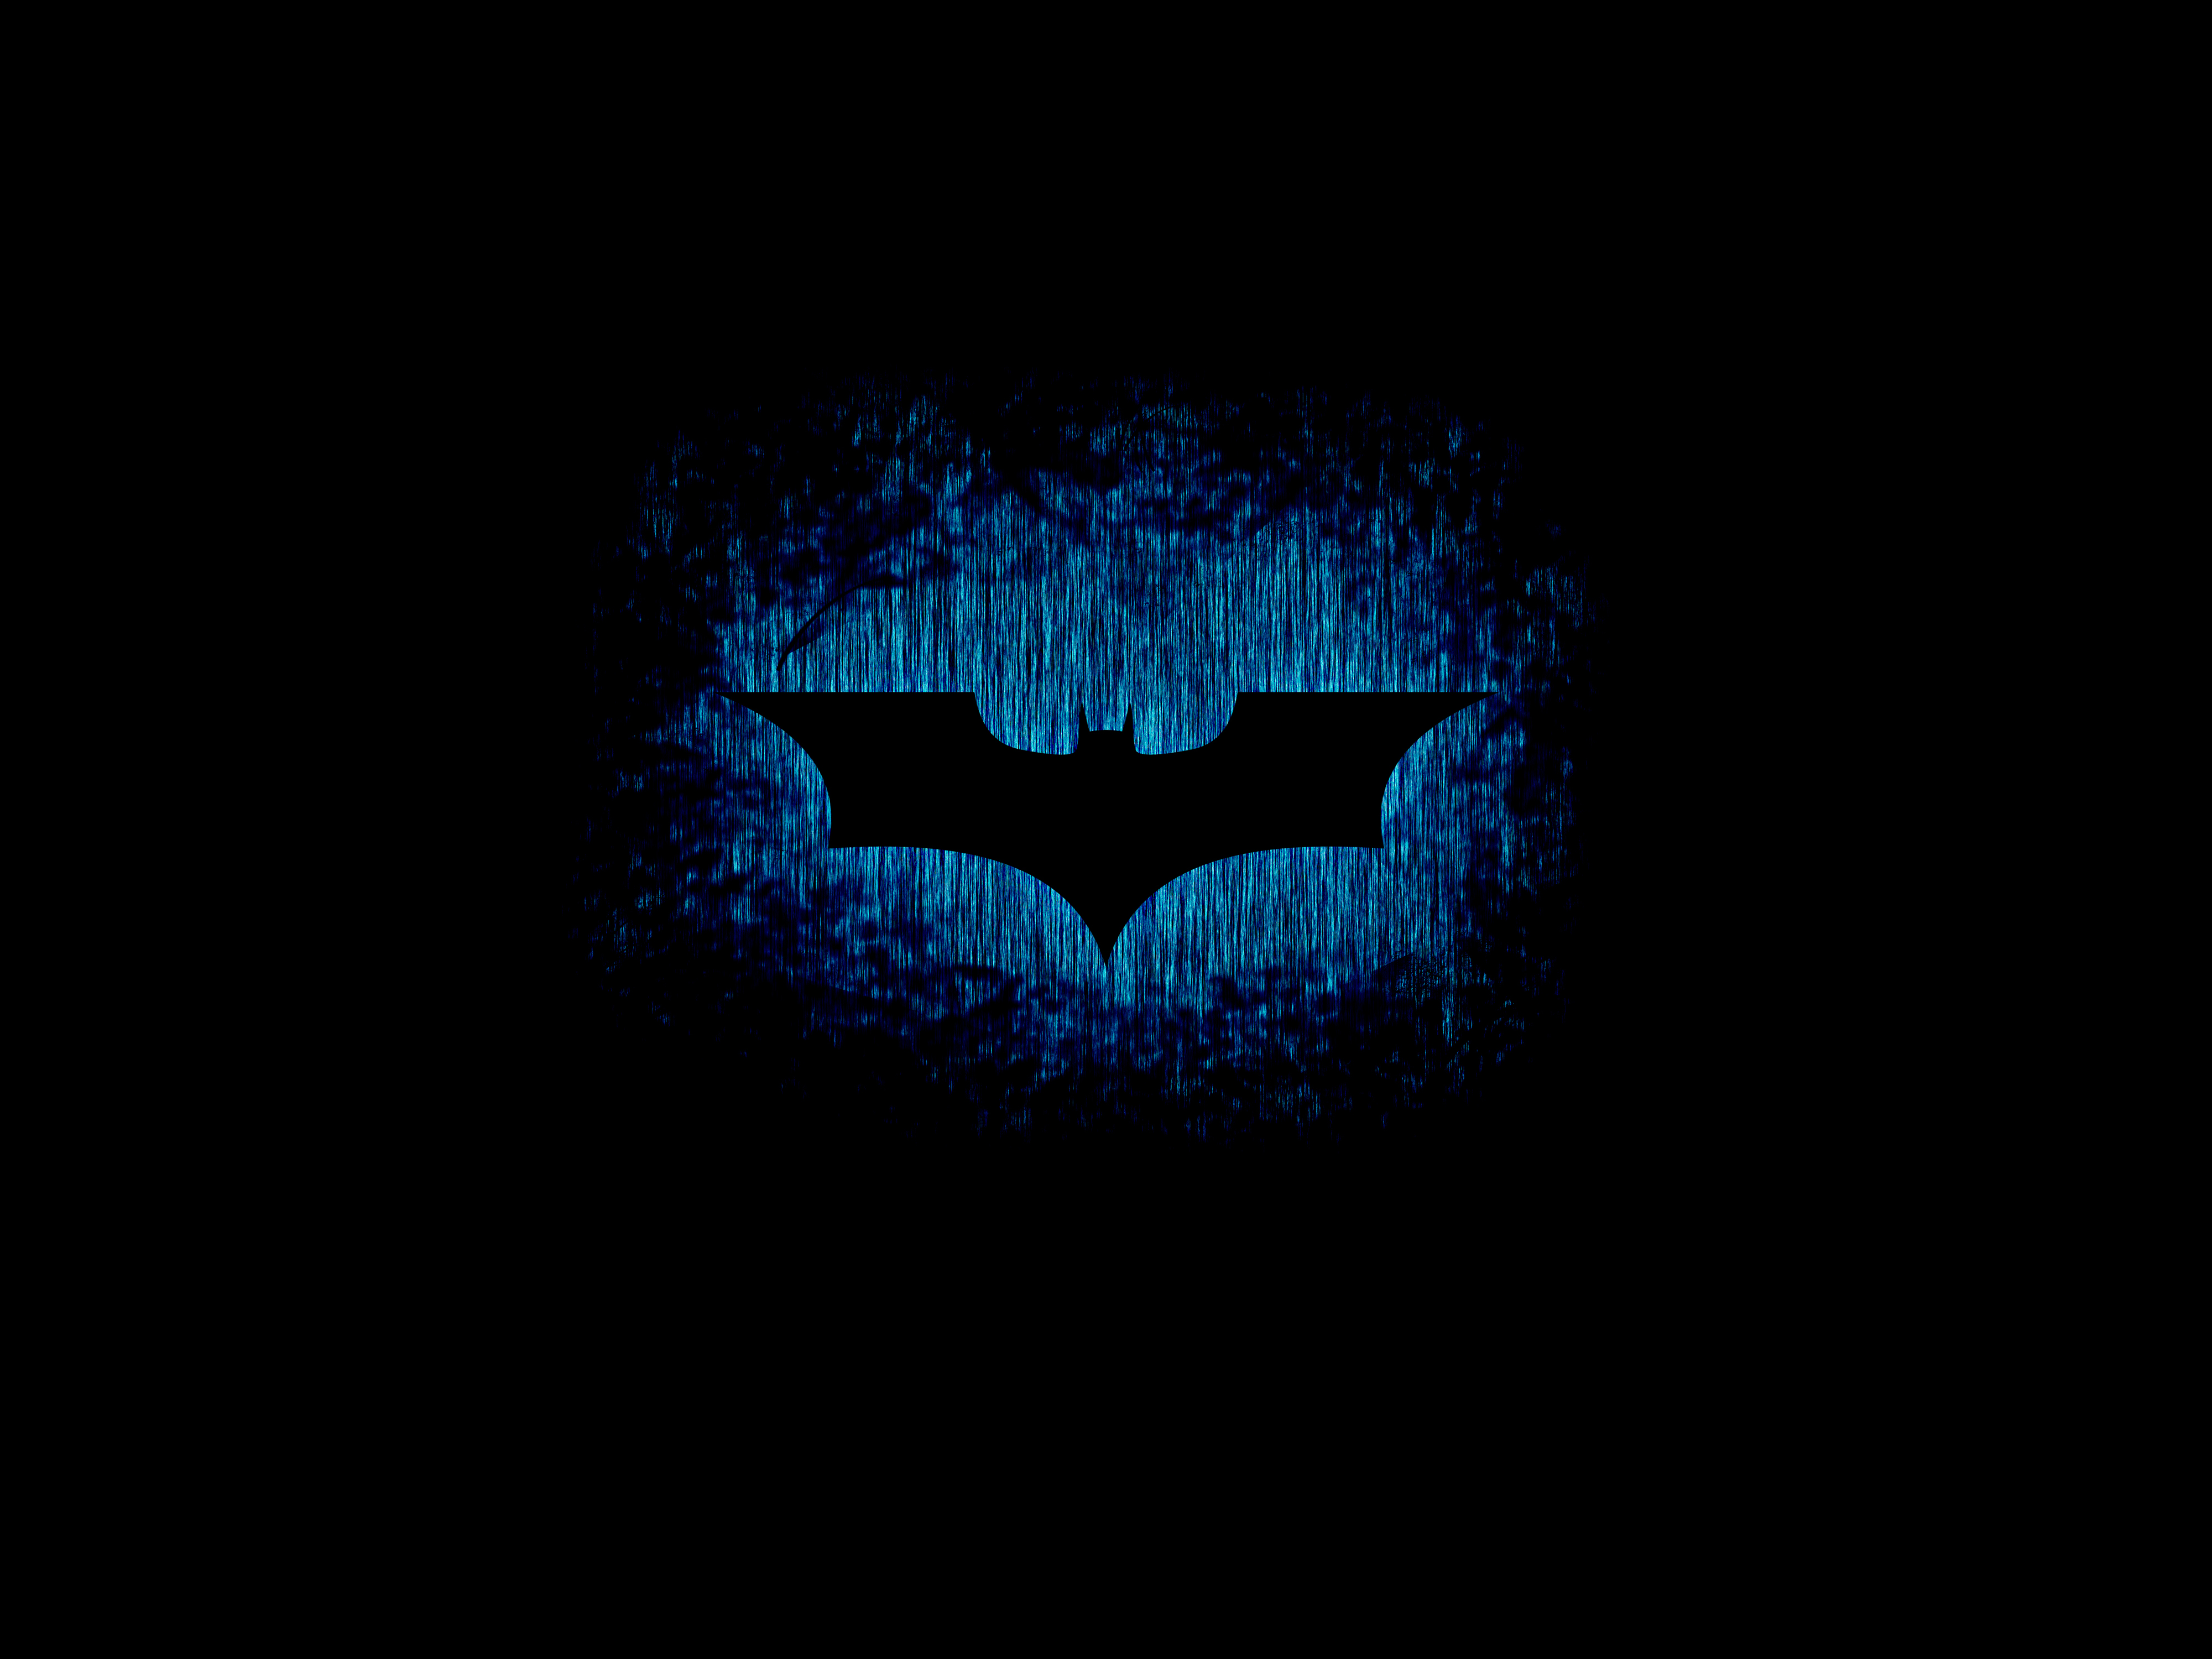 Batman 4k Ultra HD Wallpaper and Background Image | 4000x3000 | ID:445475